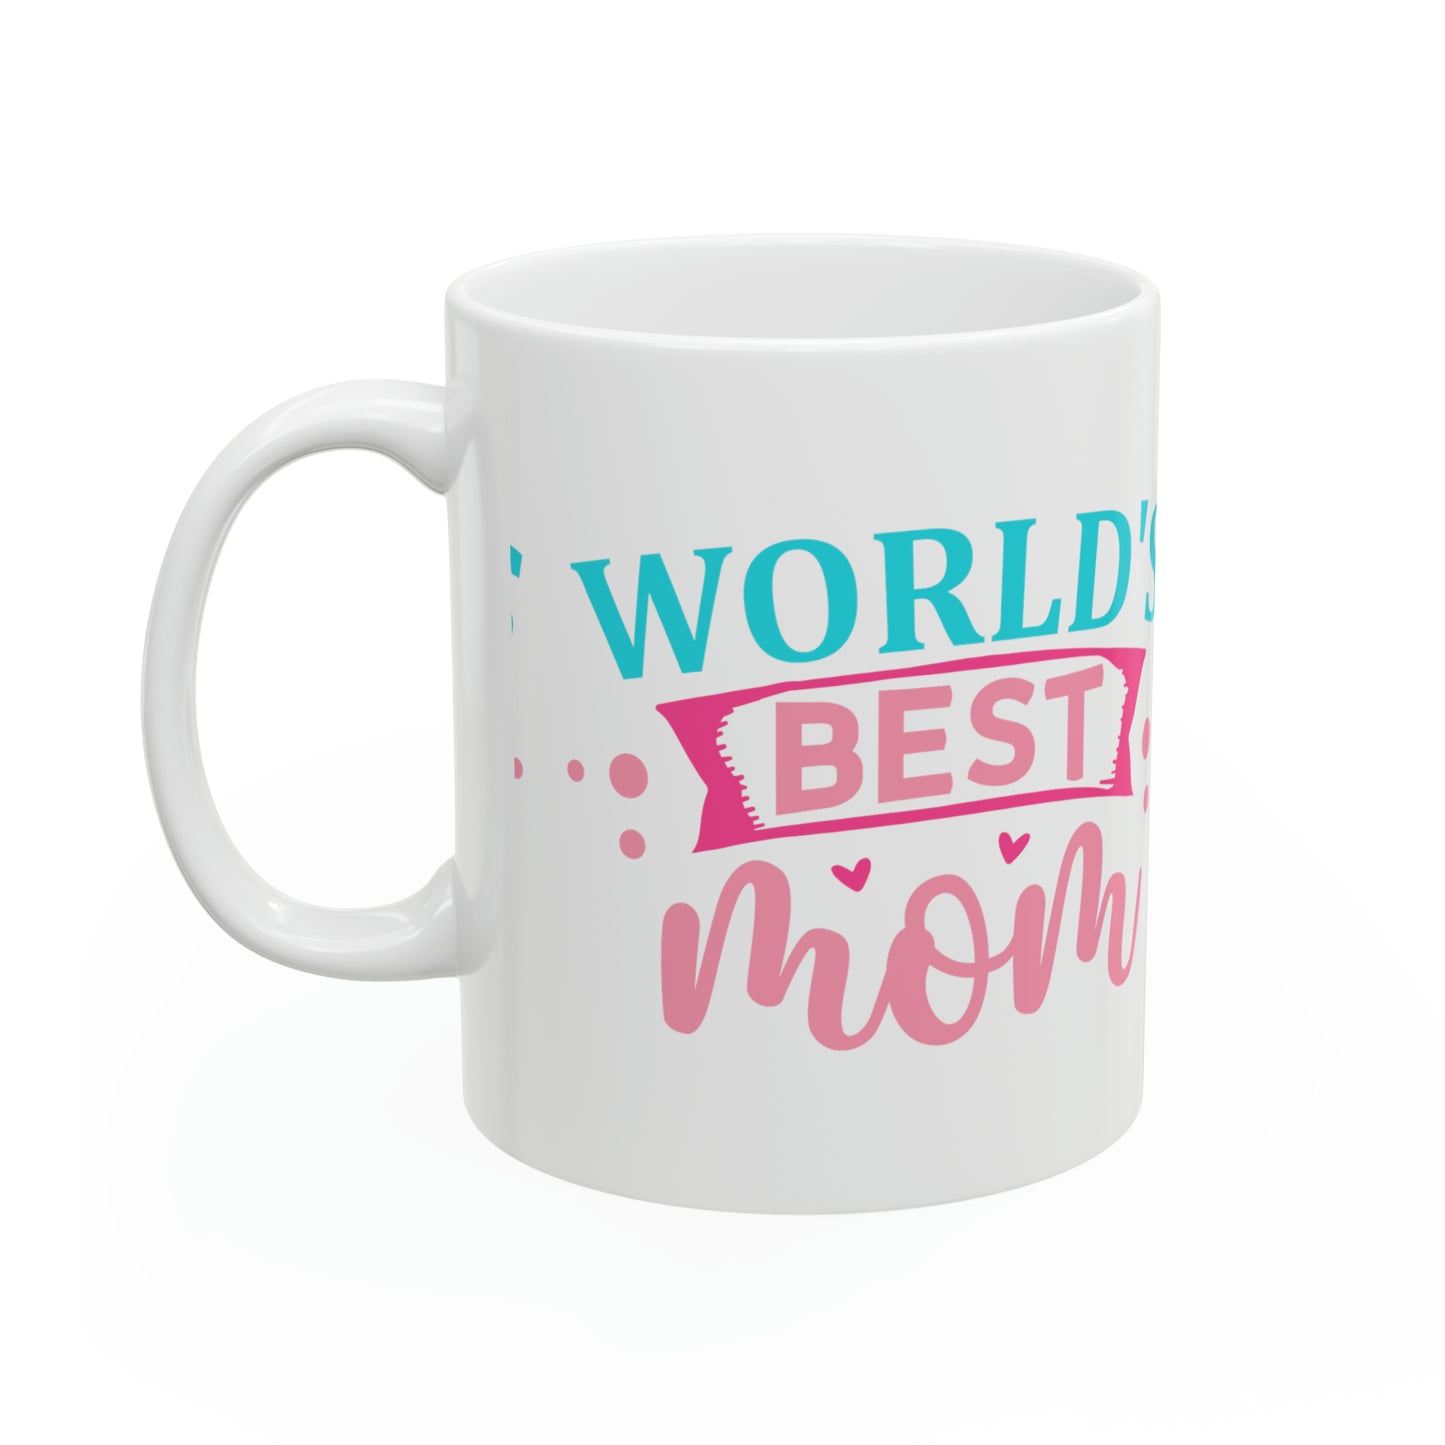 Worlds Best Mom Ceramic Mug, 11oz